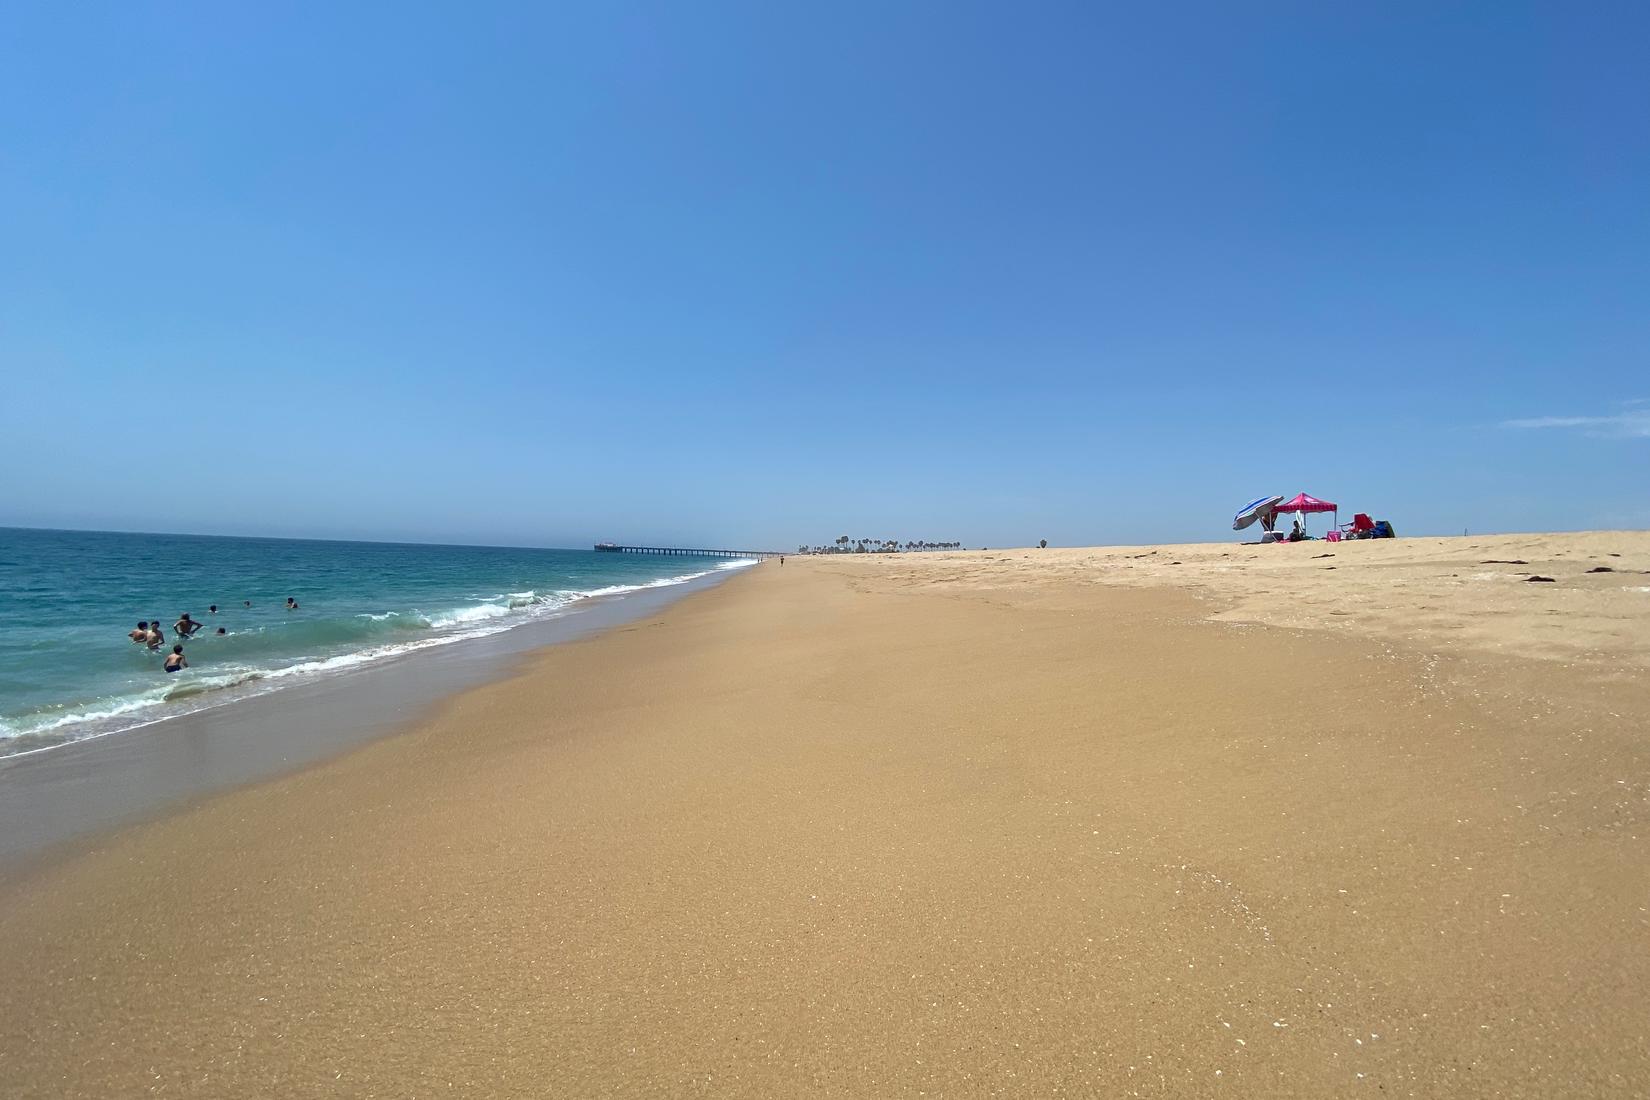 Sandee - Balboa Beach